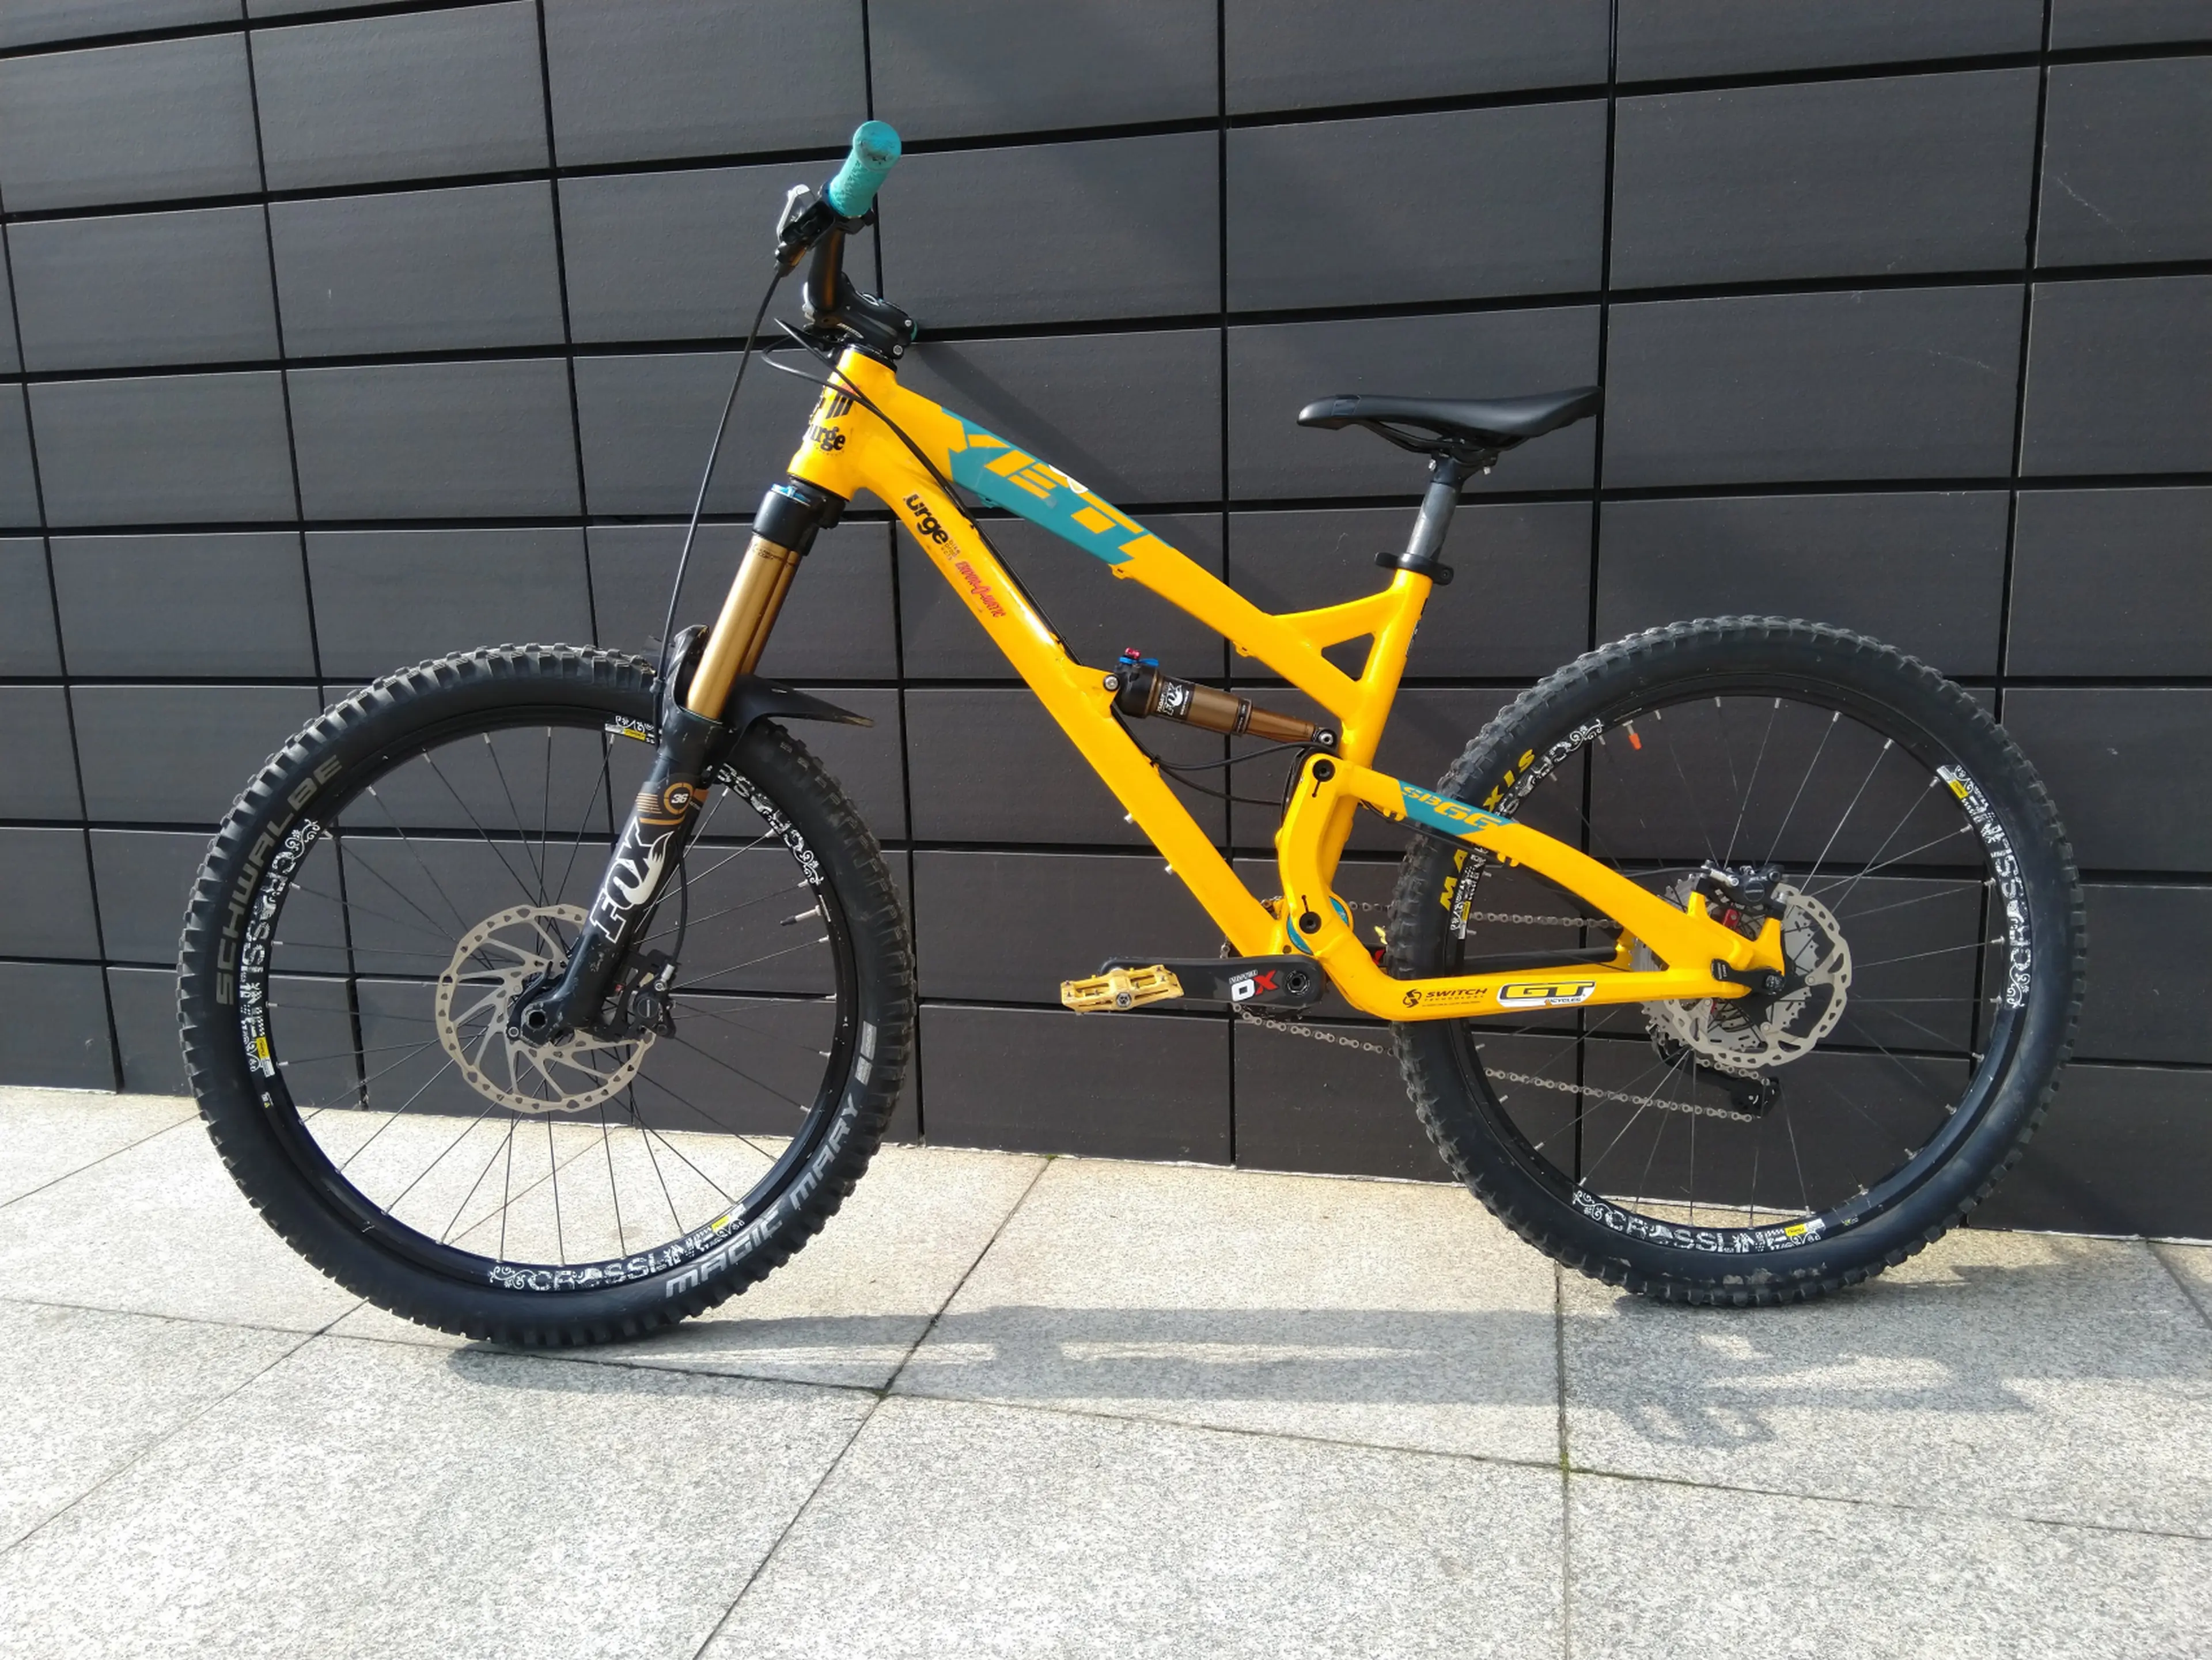 1. (Vândută) Bicicletă Yeti SB66, mărime S, roți 26", an 2014